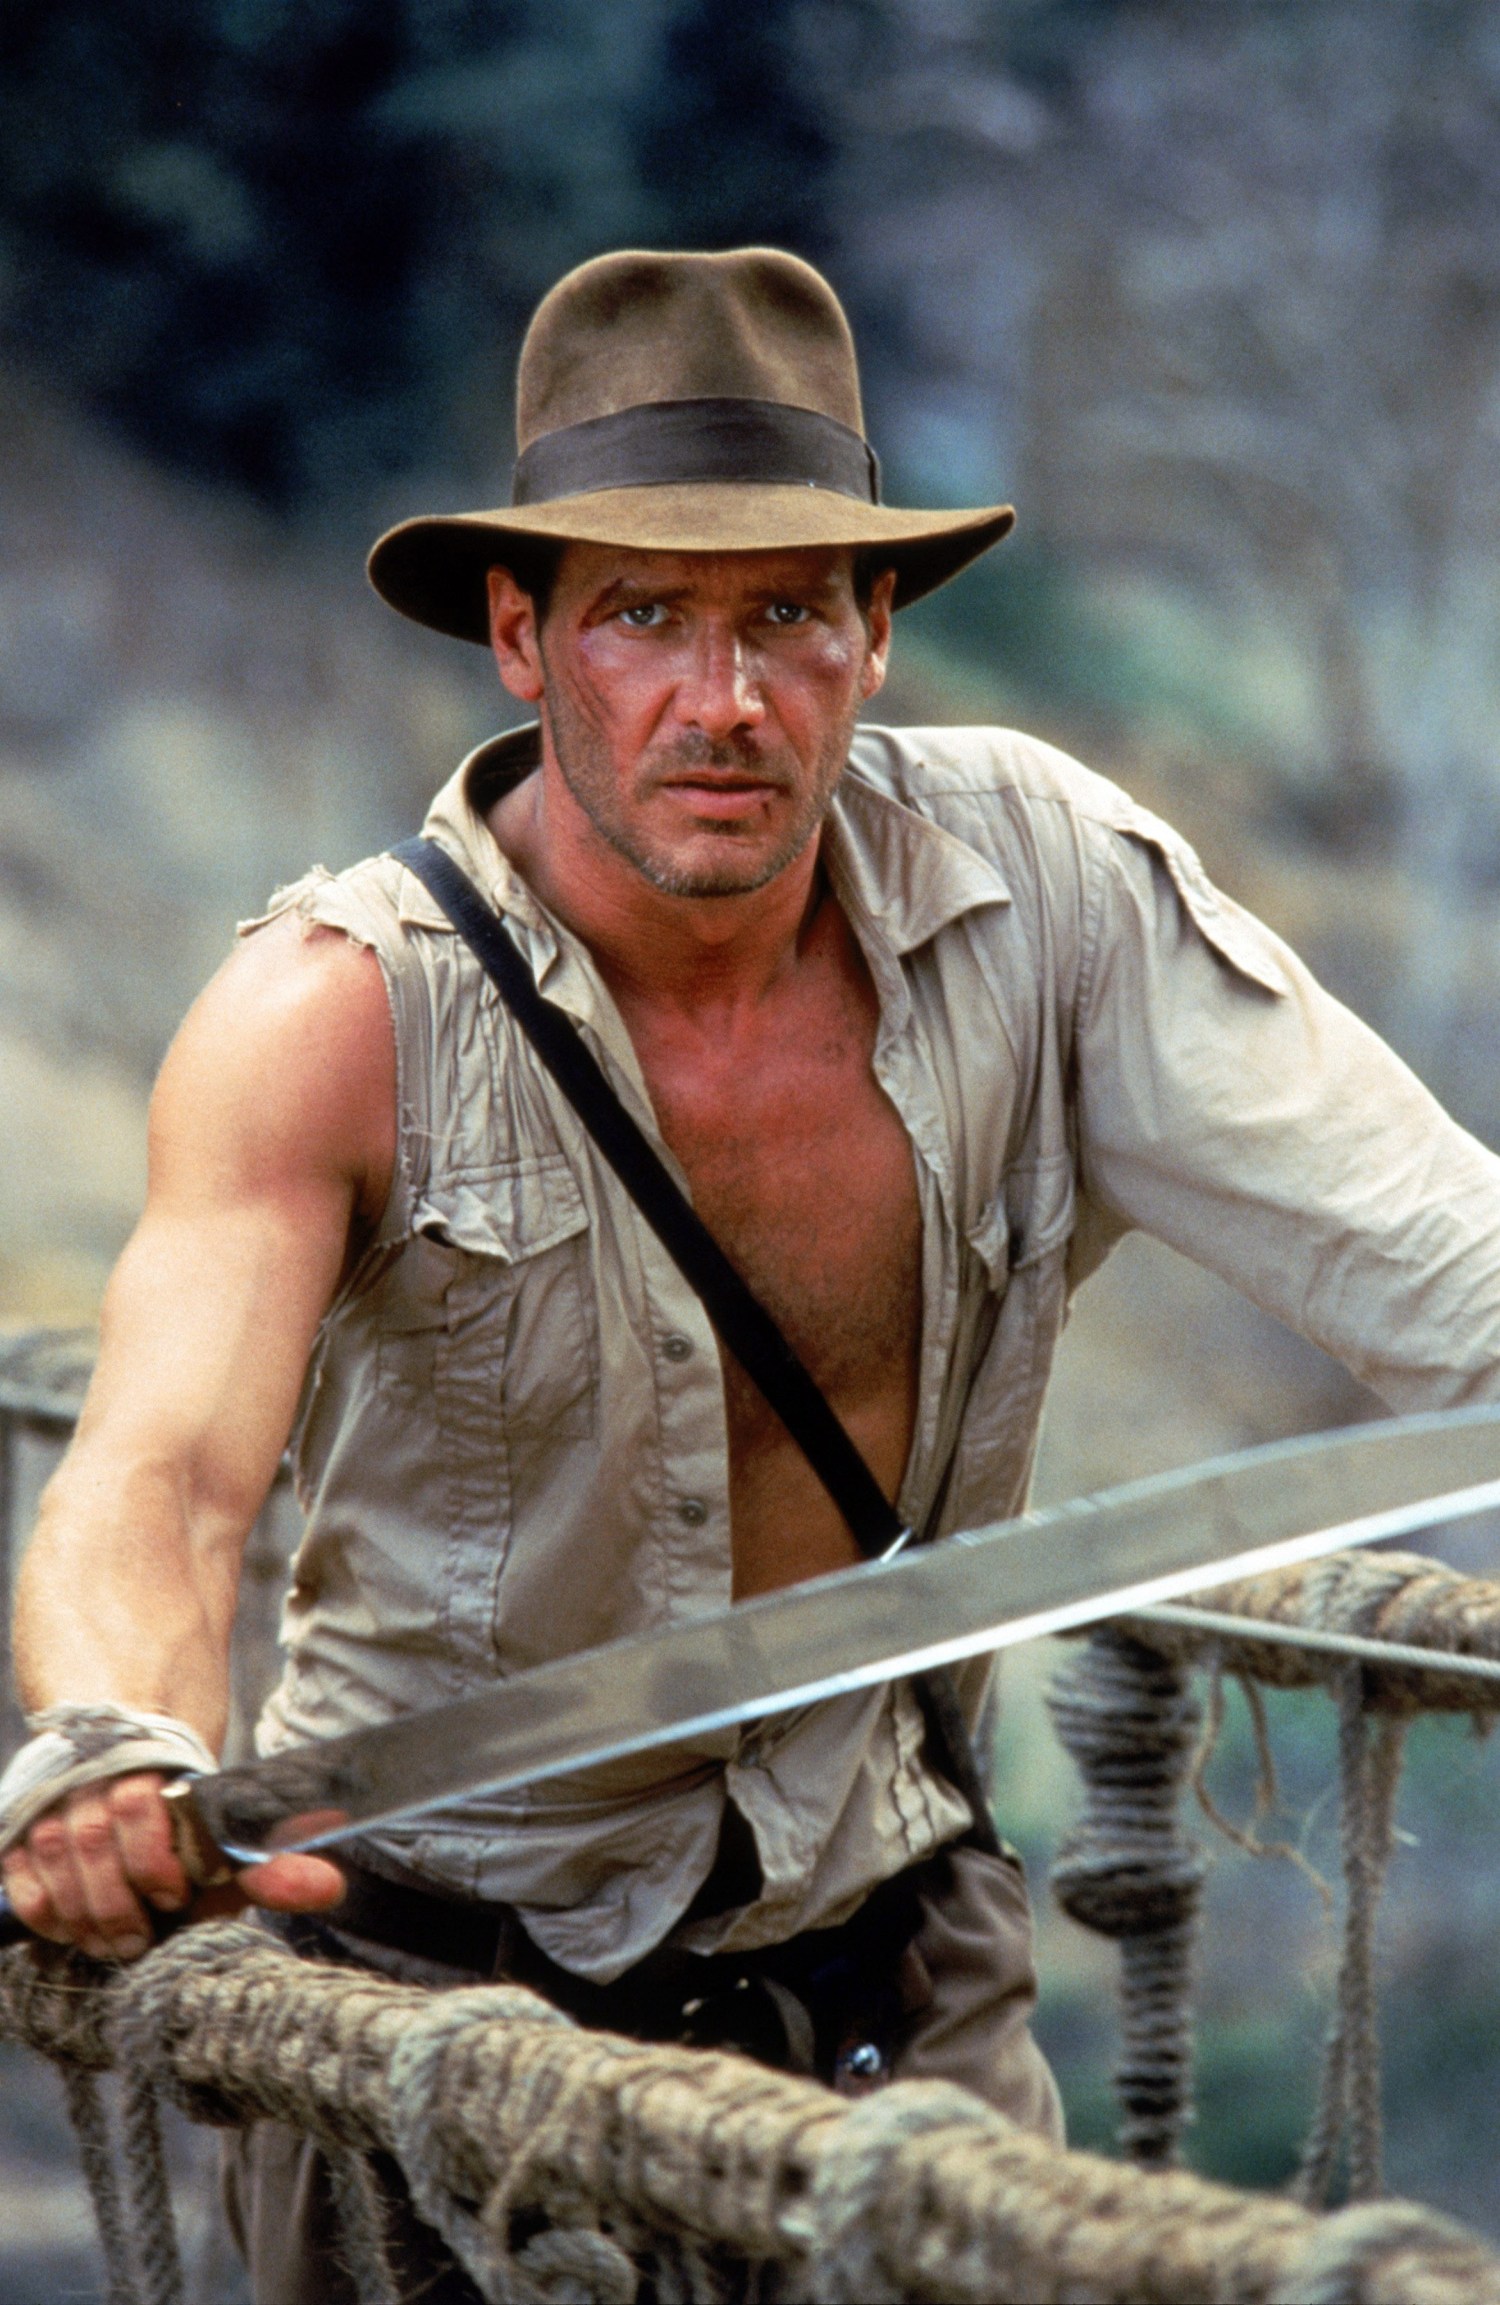 Indiana Jones' Is Back: Steven Spielberg, Harrison Ford Reunite